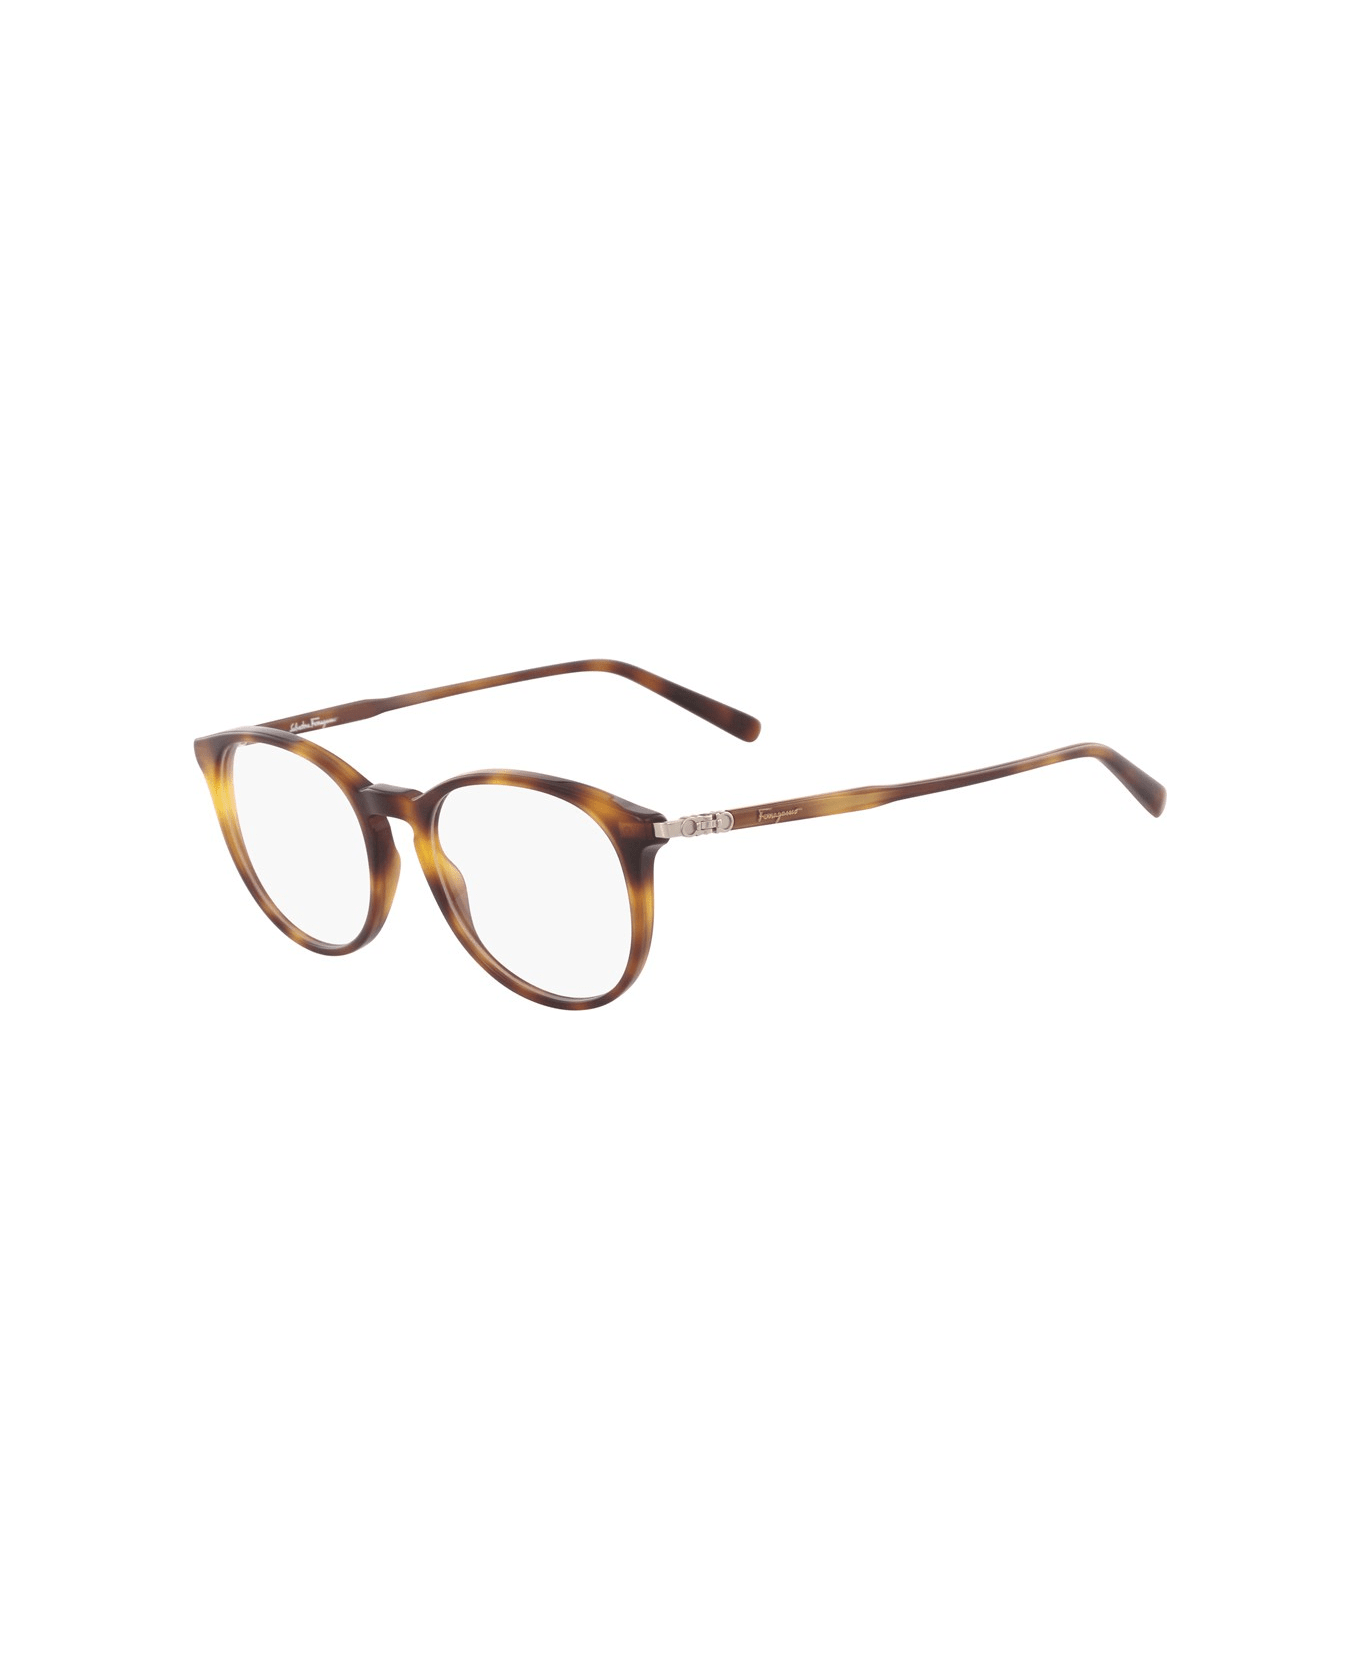 Salvatore Ferragamo Eyewear Sf2823 Glasses - Arancione